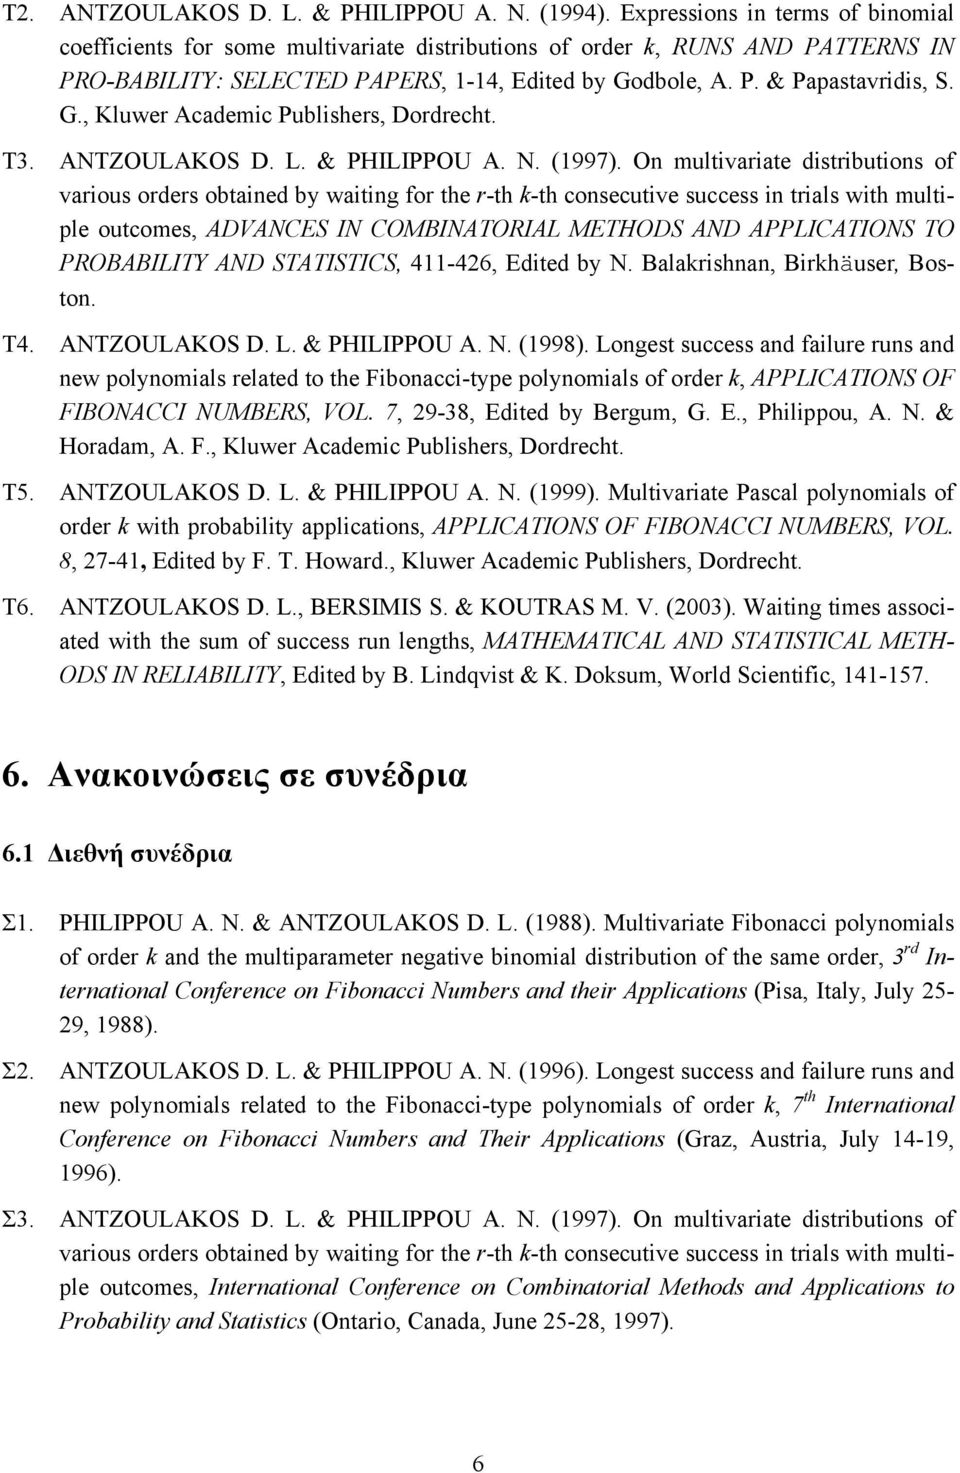 dbole, A. P. & Papastavridis, S. G., Kluwer Academic Publishers, Dordrecht. Τ3. ANTZOULAKOS D. L. & PHILIPPOU A. N. (1997).